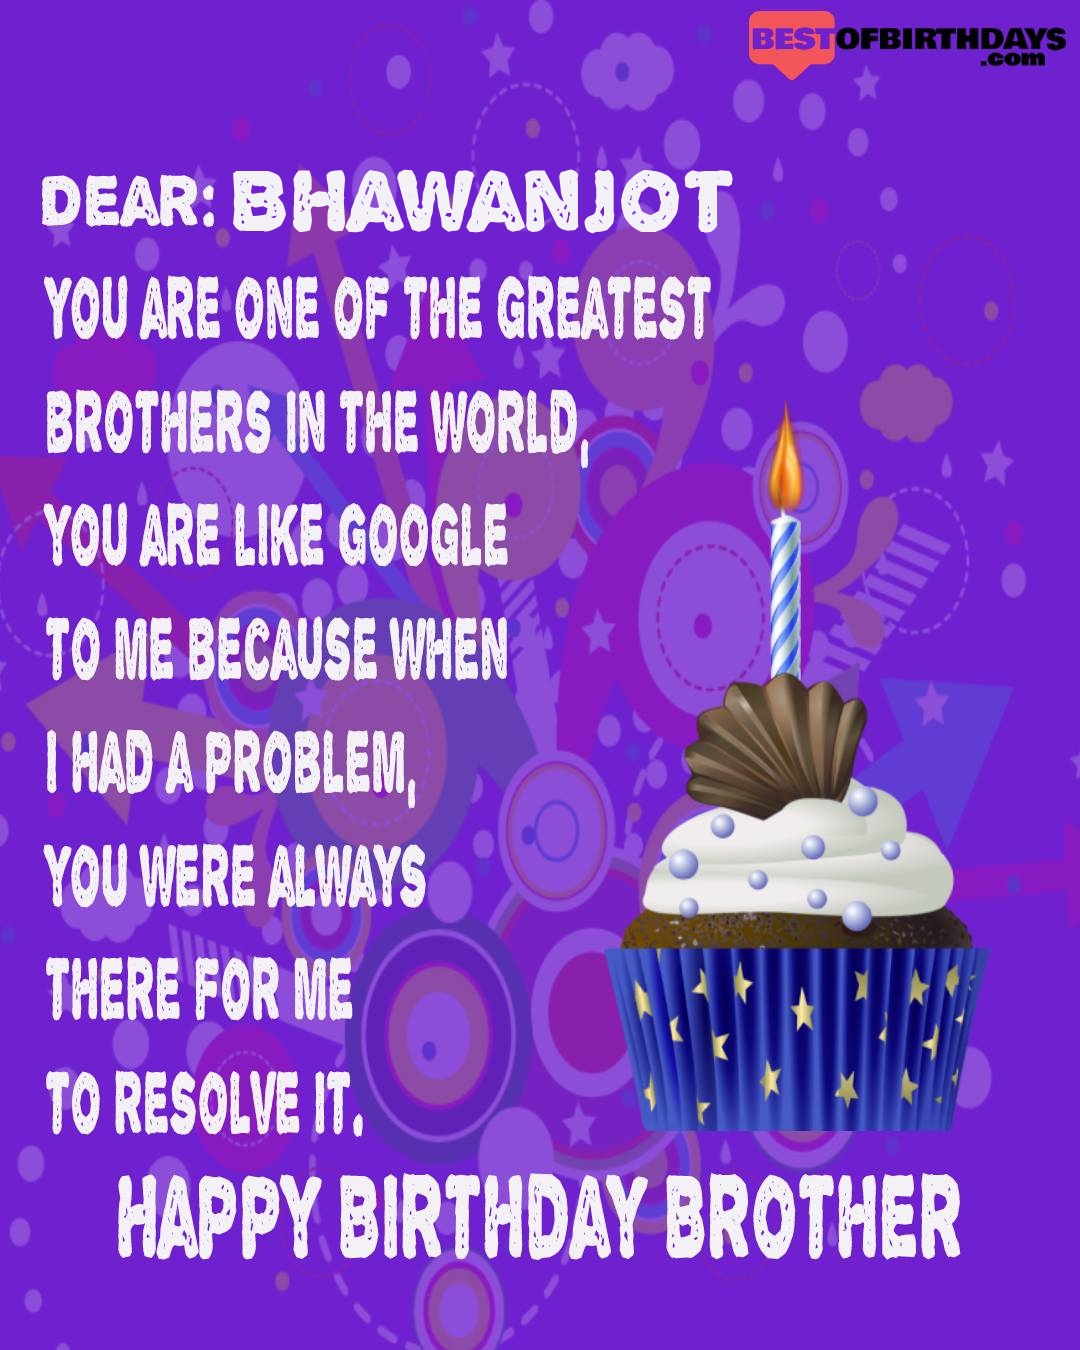 Happy birthday bhawanjot bhai brother bro